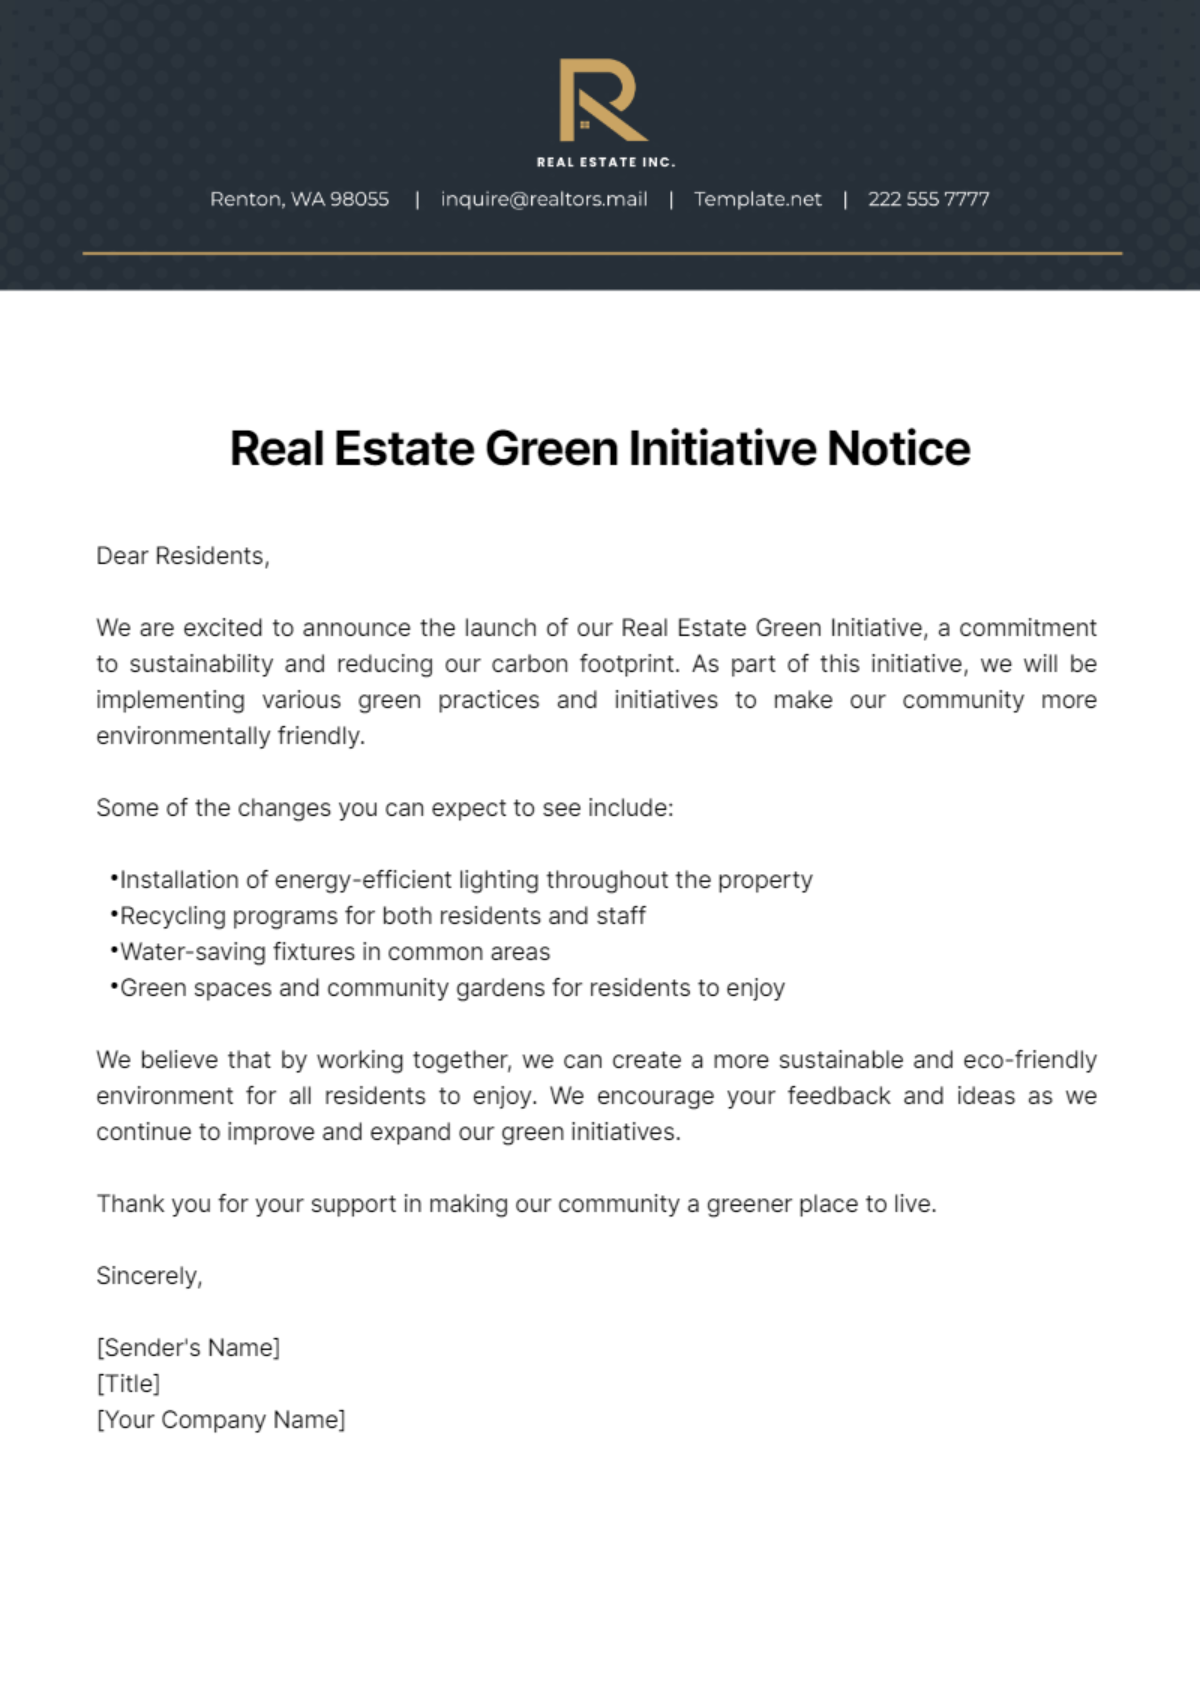 Real Estate Green Initiative Notice Template